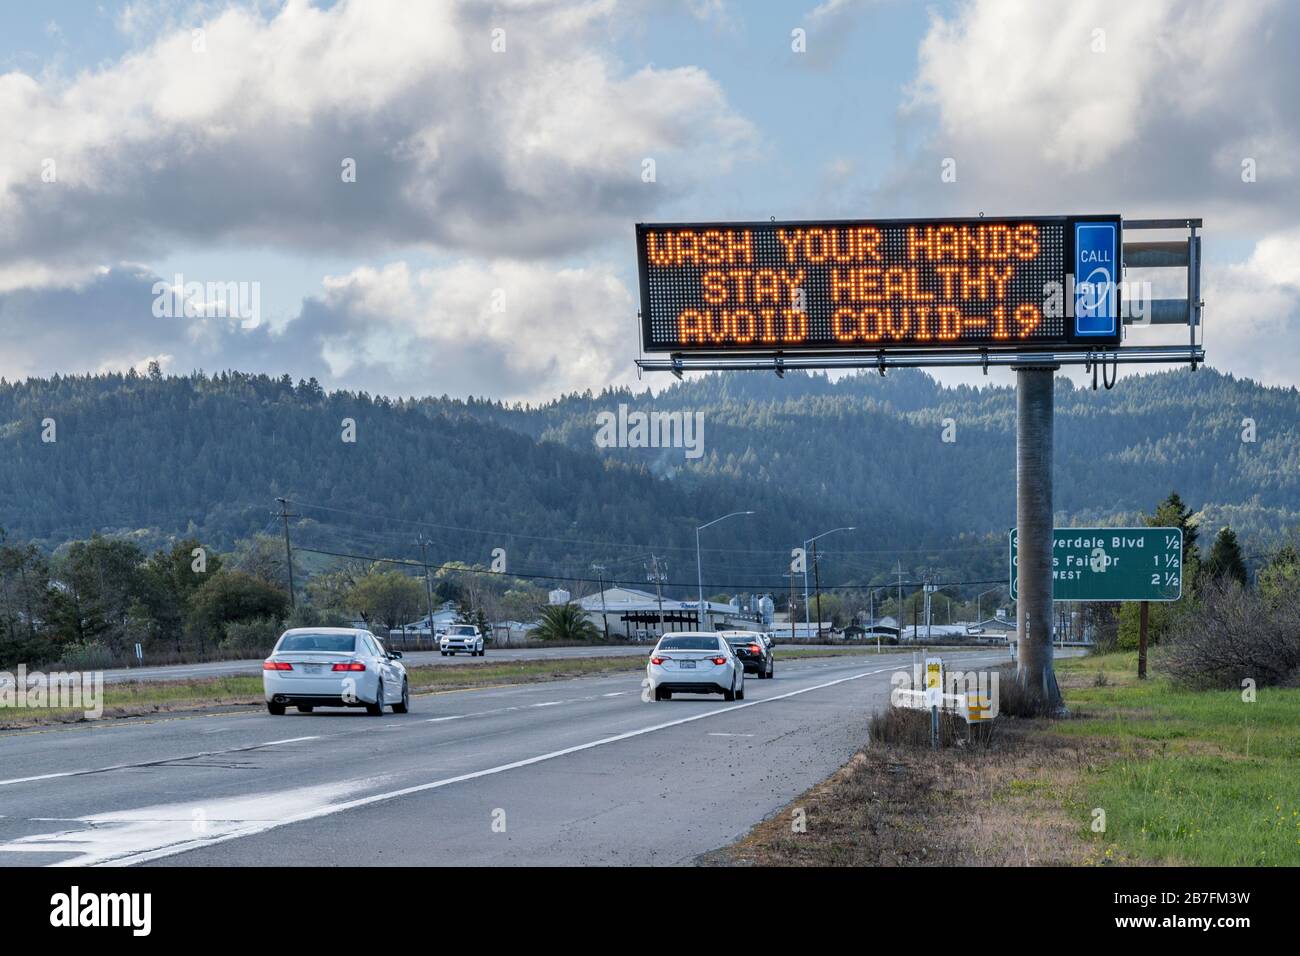 Highway message board promoting safety protocols for avoiding COVID-19 Coronavirus. Stock Photo